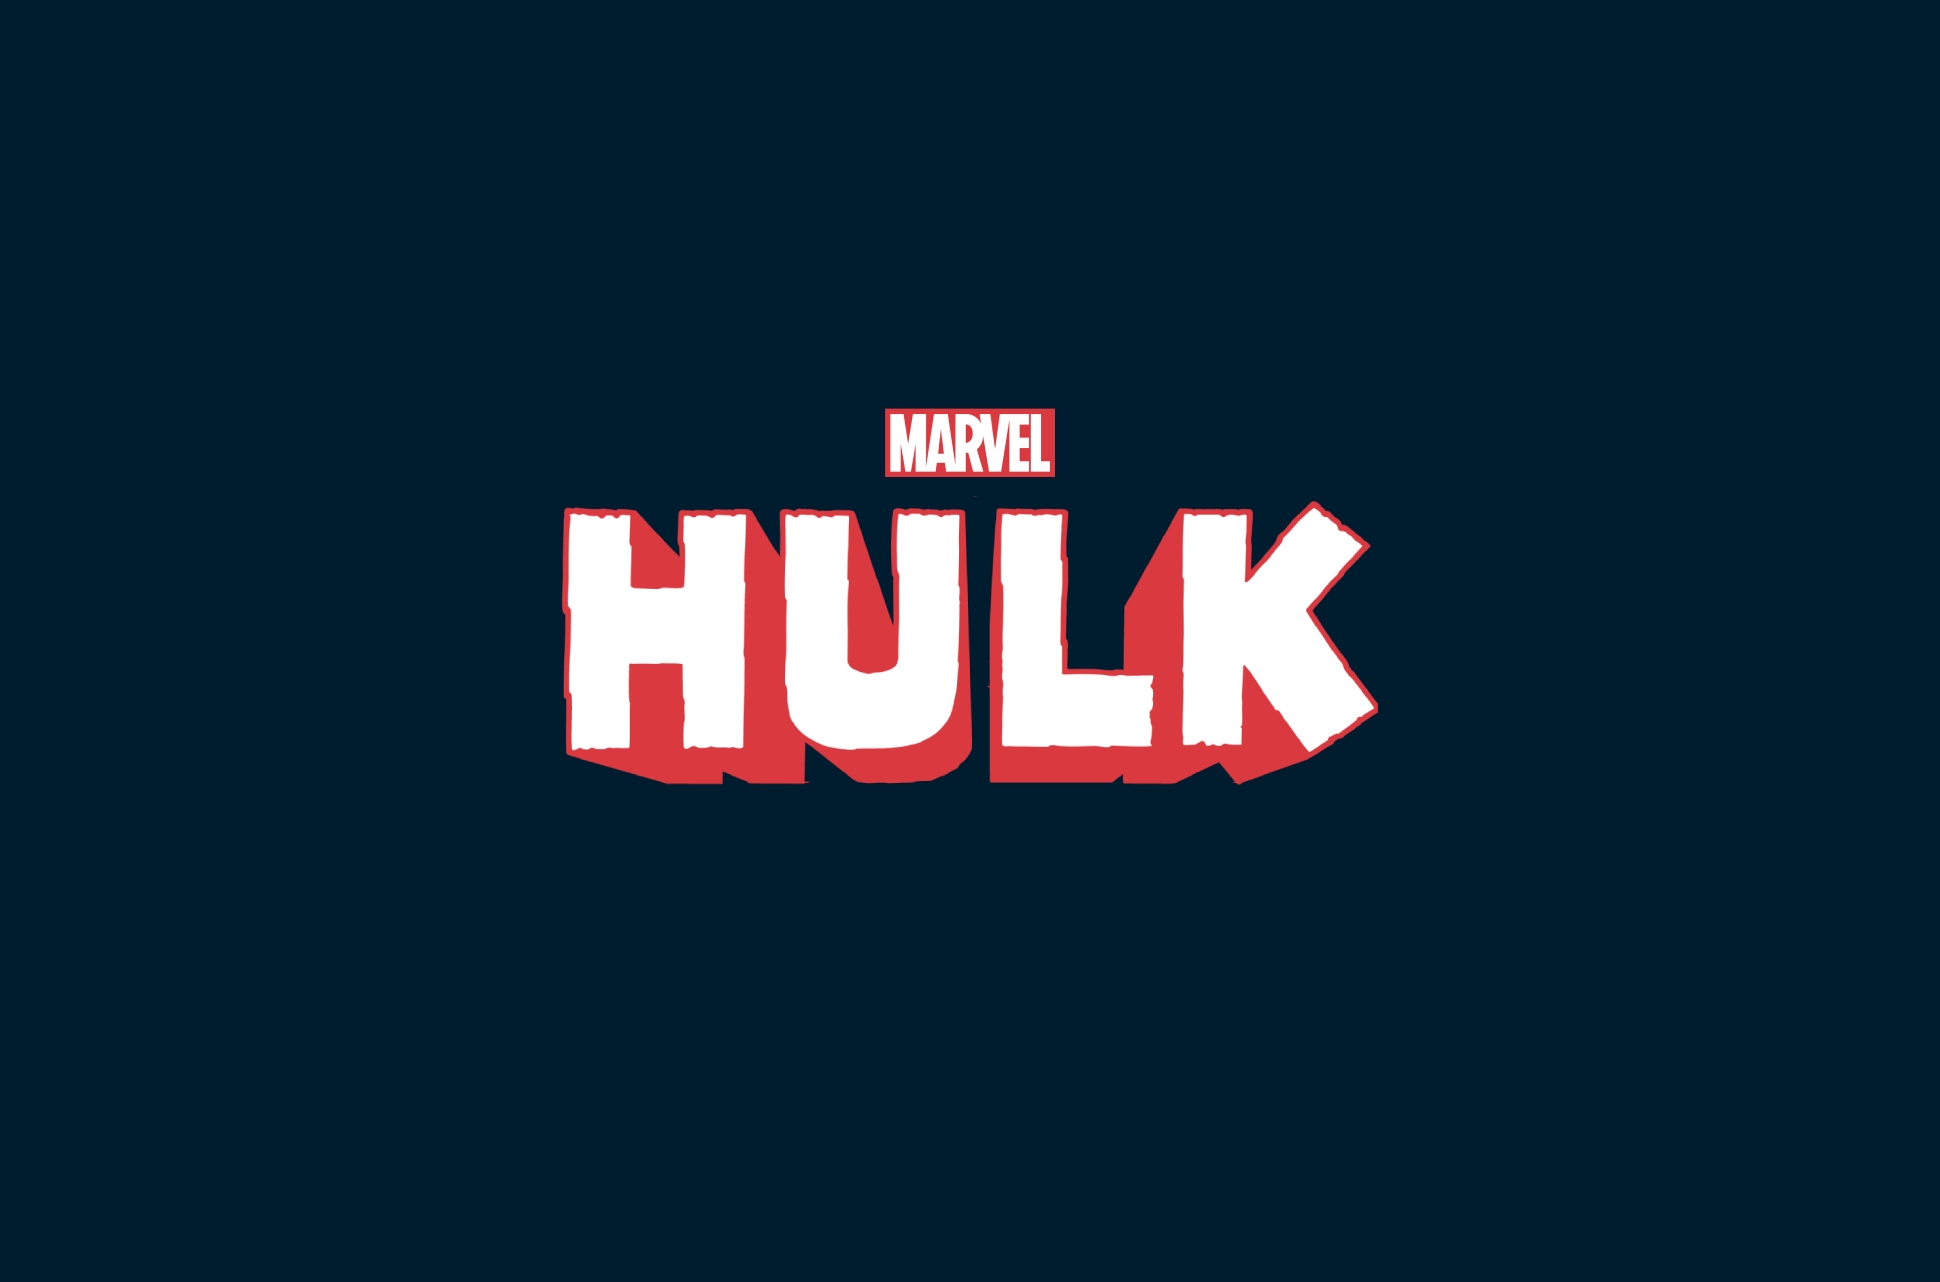 Marvel/Universal Hulk film.